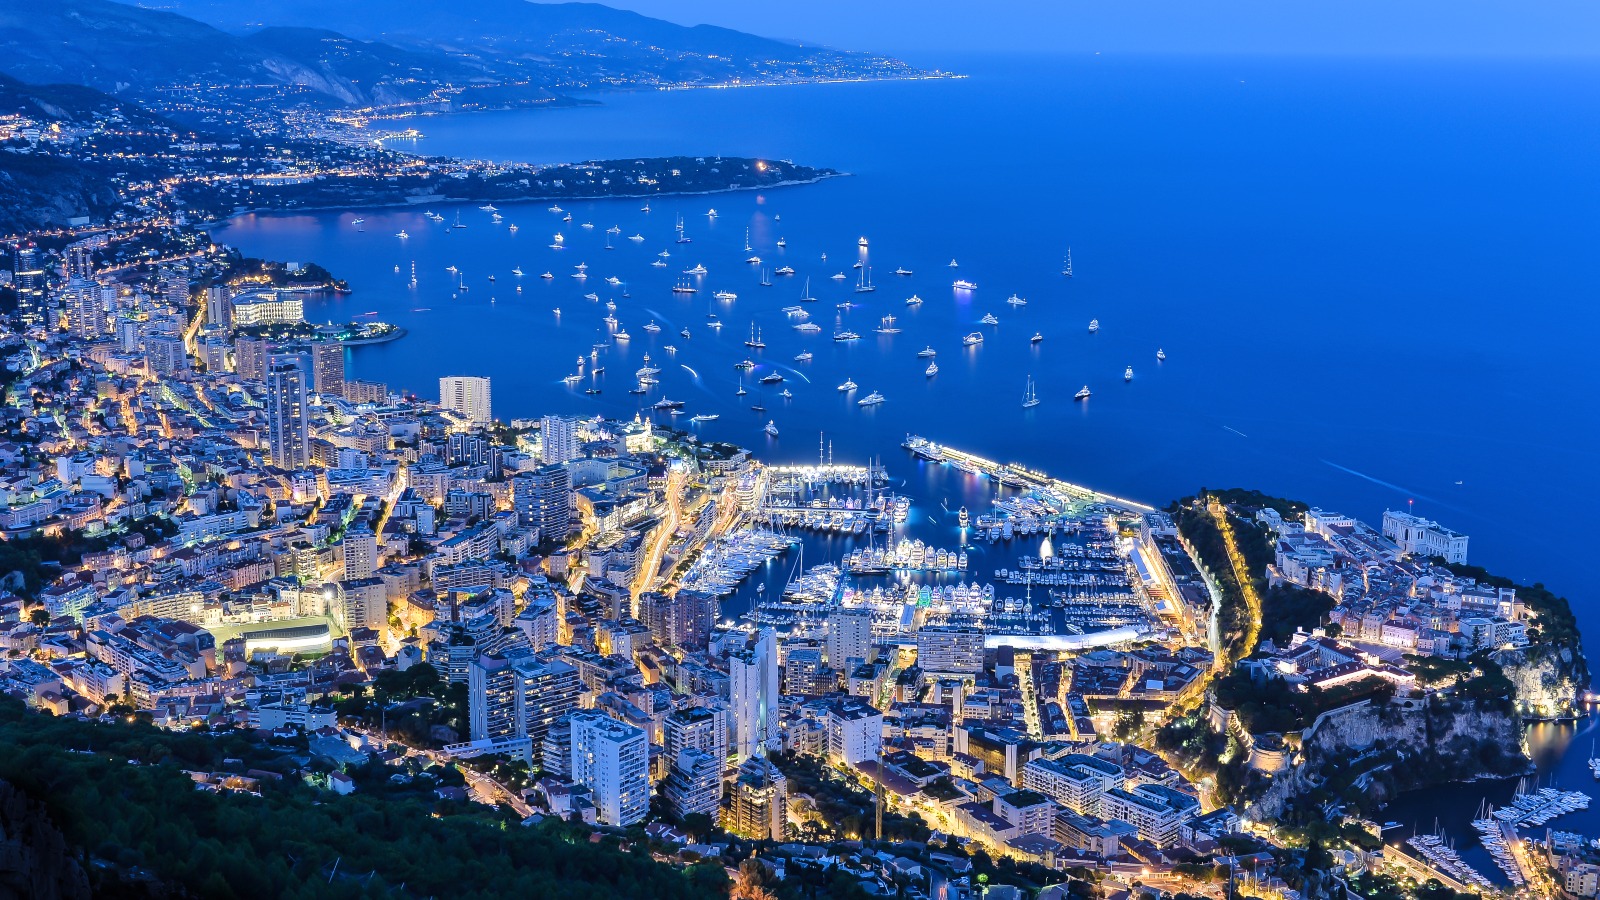 Monaco Life - Montecarlo latest news hotels real estate formula 1